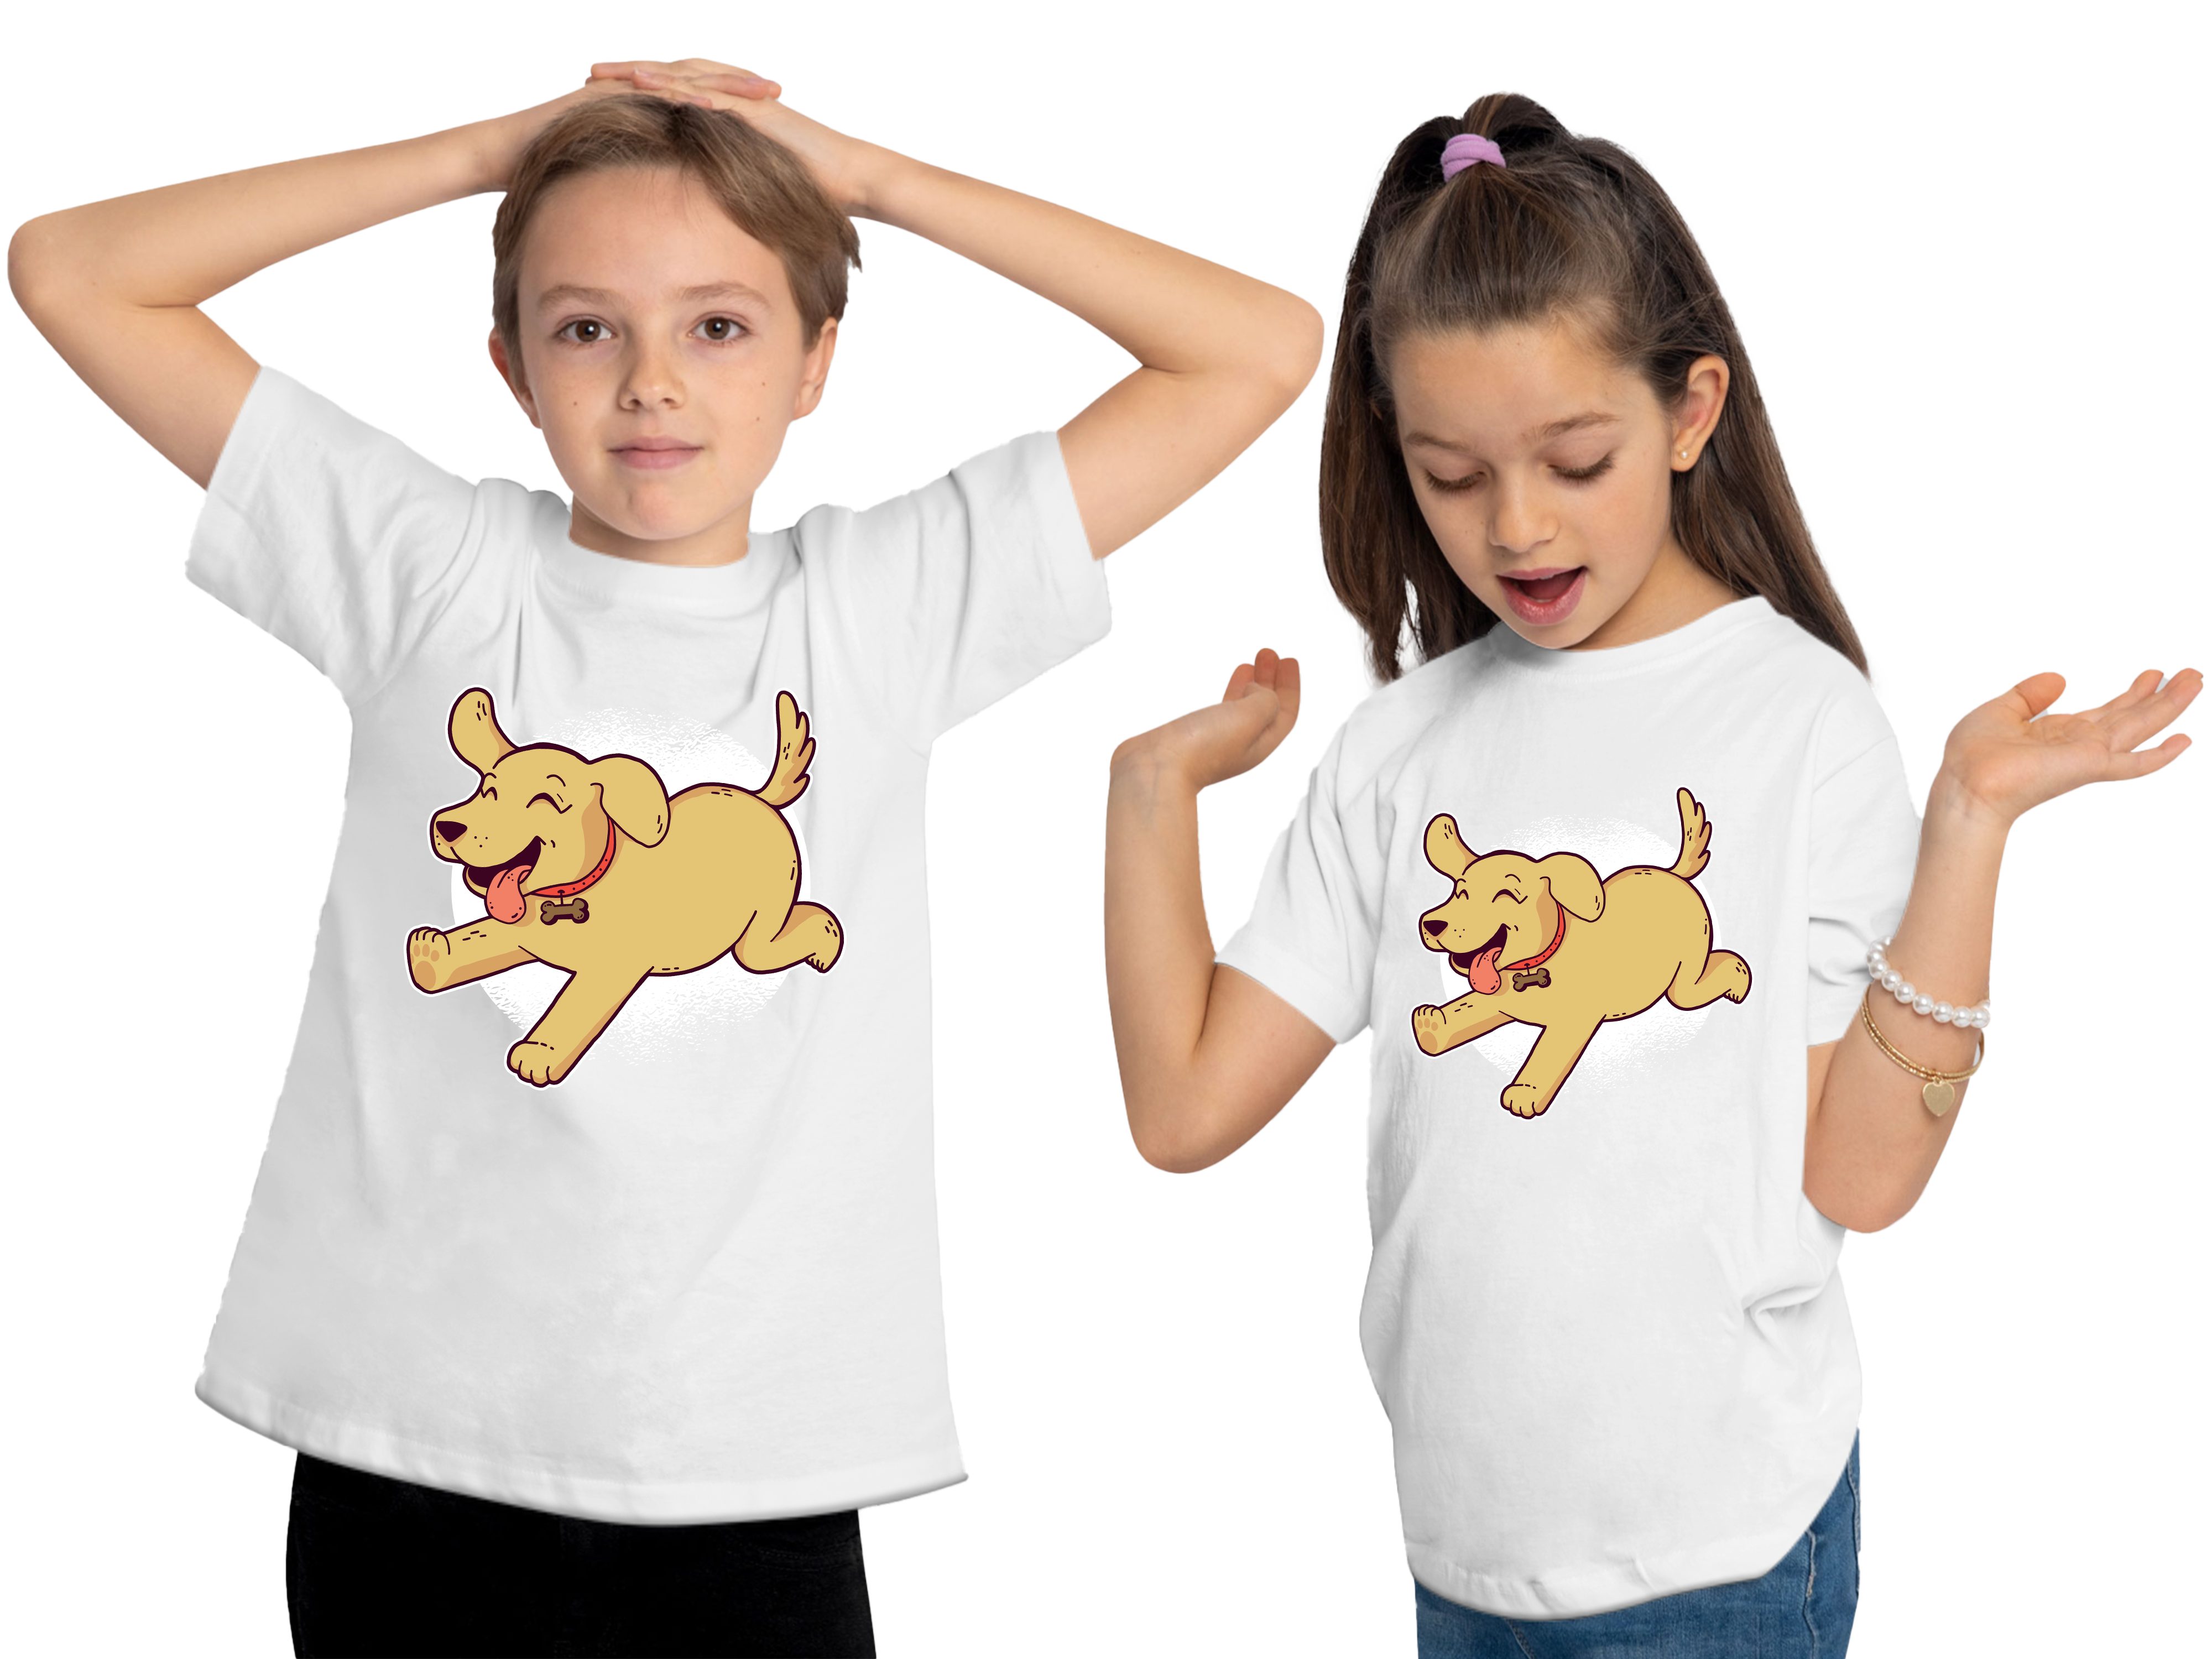 Print bedruckt Hunde MyDesign24 Welpe Shirt mit Kinder Baumwollshirt i248 Labrador Spielender T-Shirt Aufdruck, weiss -